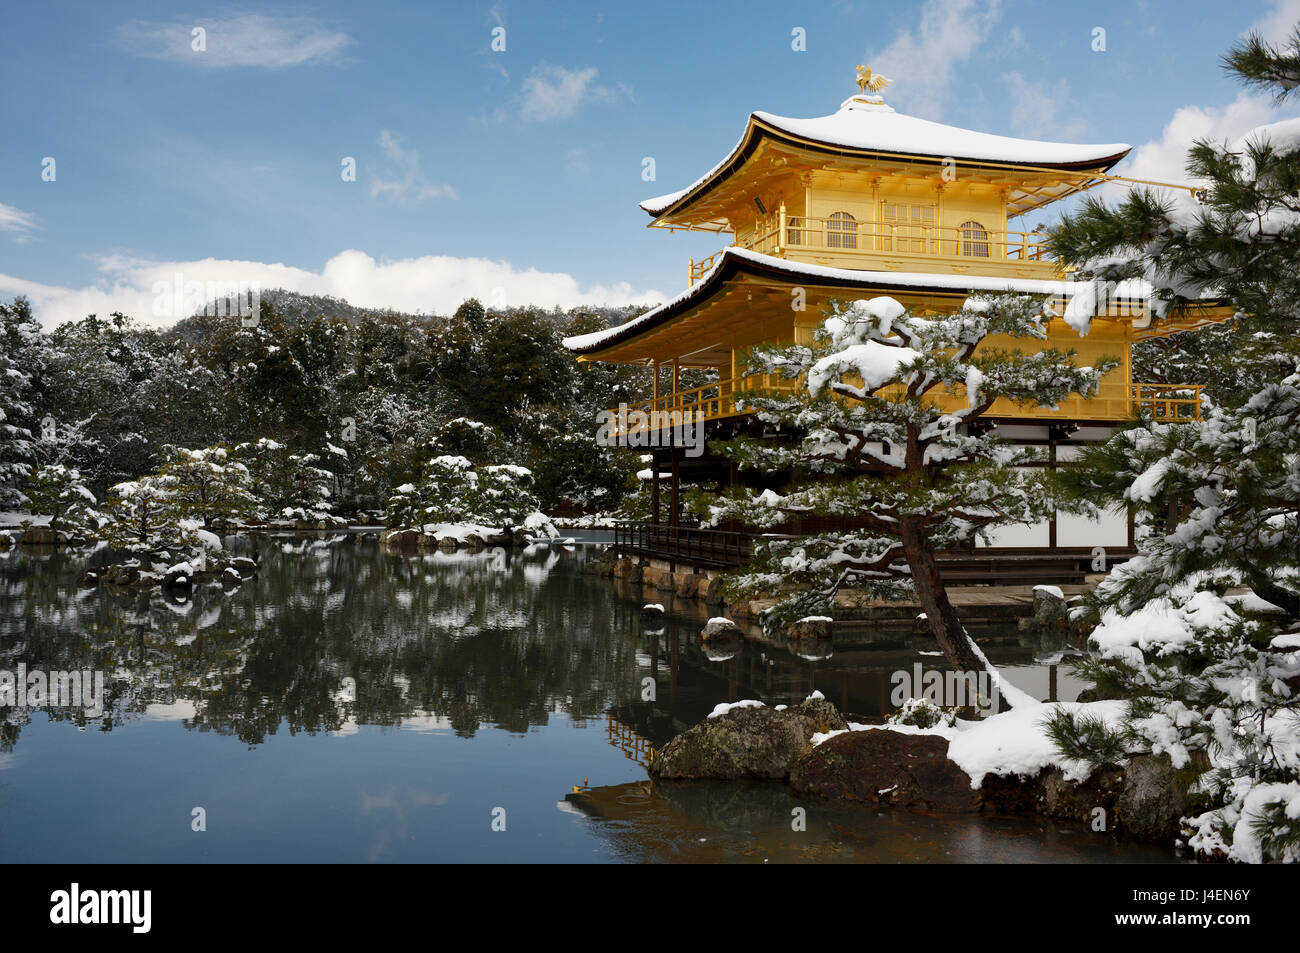 Snow-covered Kinkaku-ji (Temple of the Golden Pavilion) (Rokuon-ji), UNESCO World Heritage Site, Kyoto, Japan, Asia Stock Photo